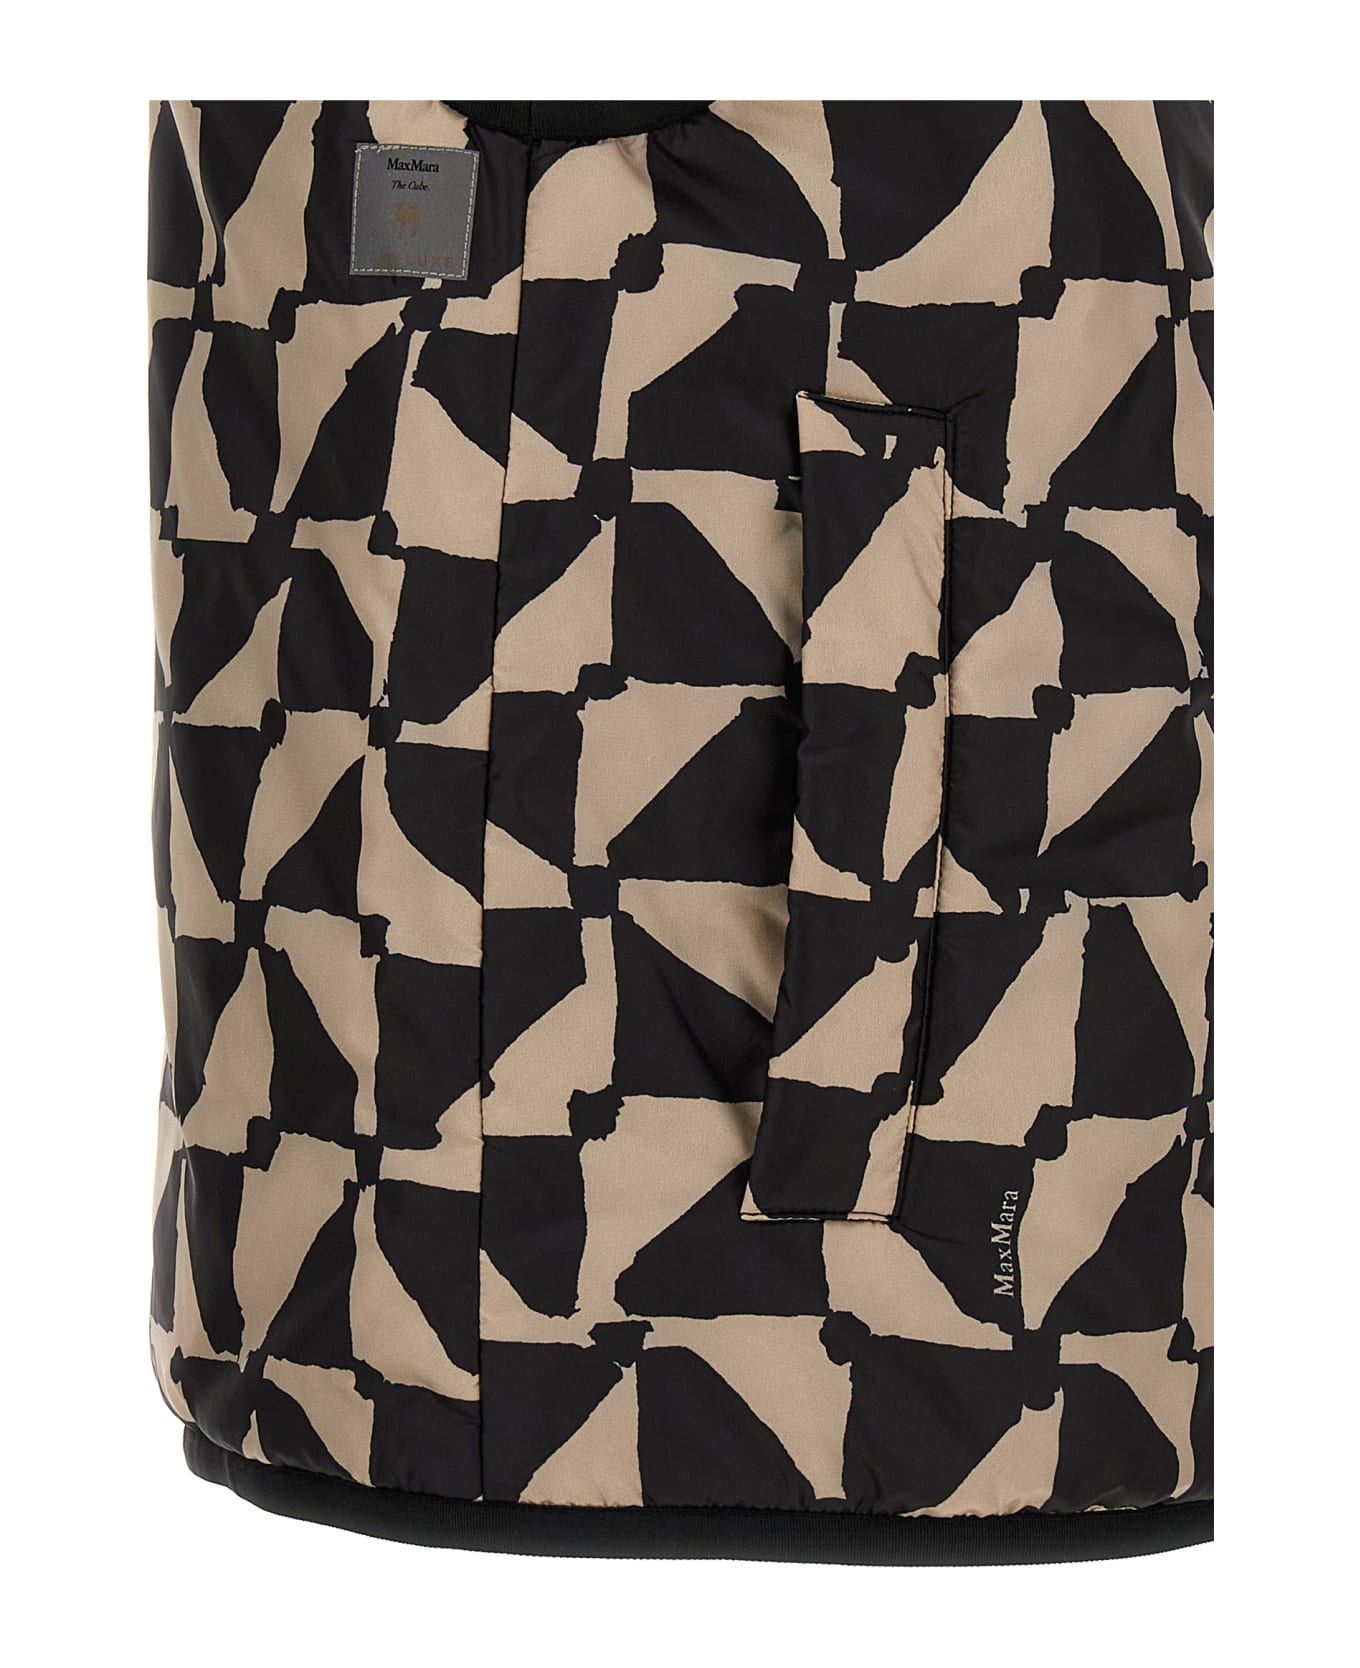 Max Mara The Cube 'lily' Reversible Vest - BLACK/NEUTRALS